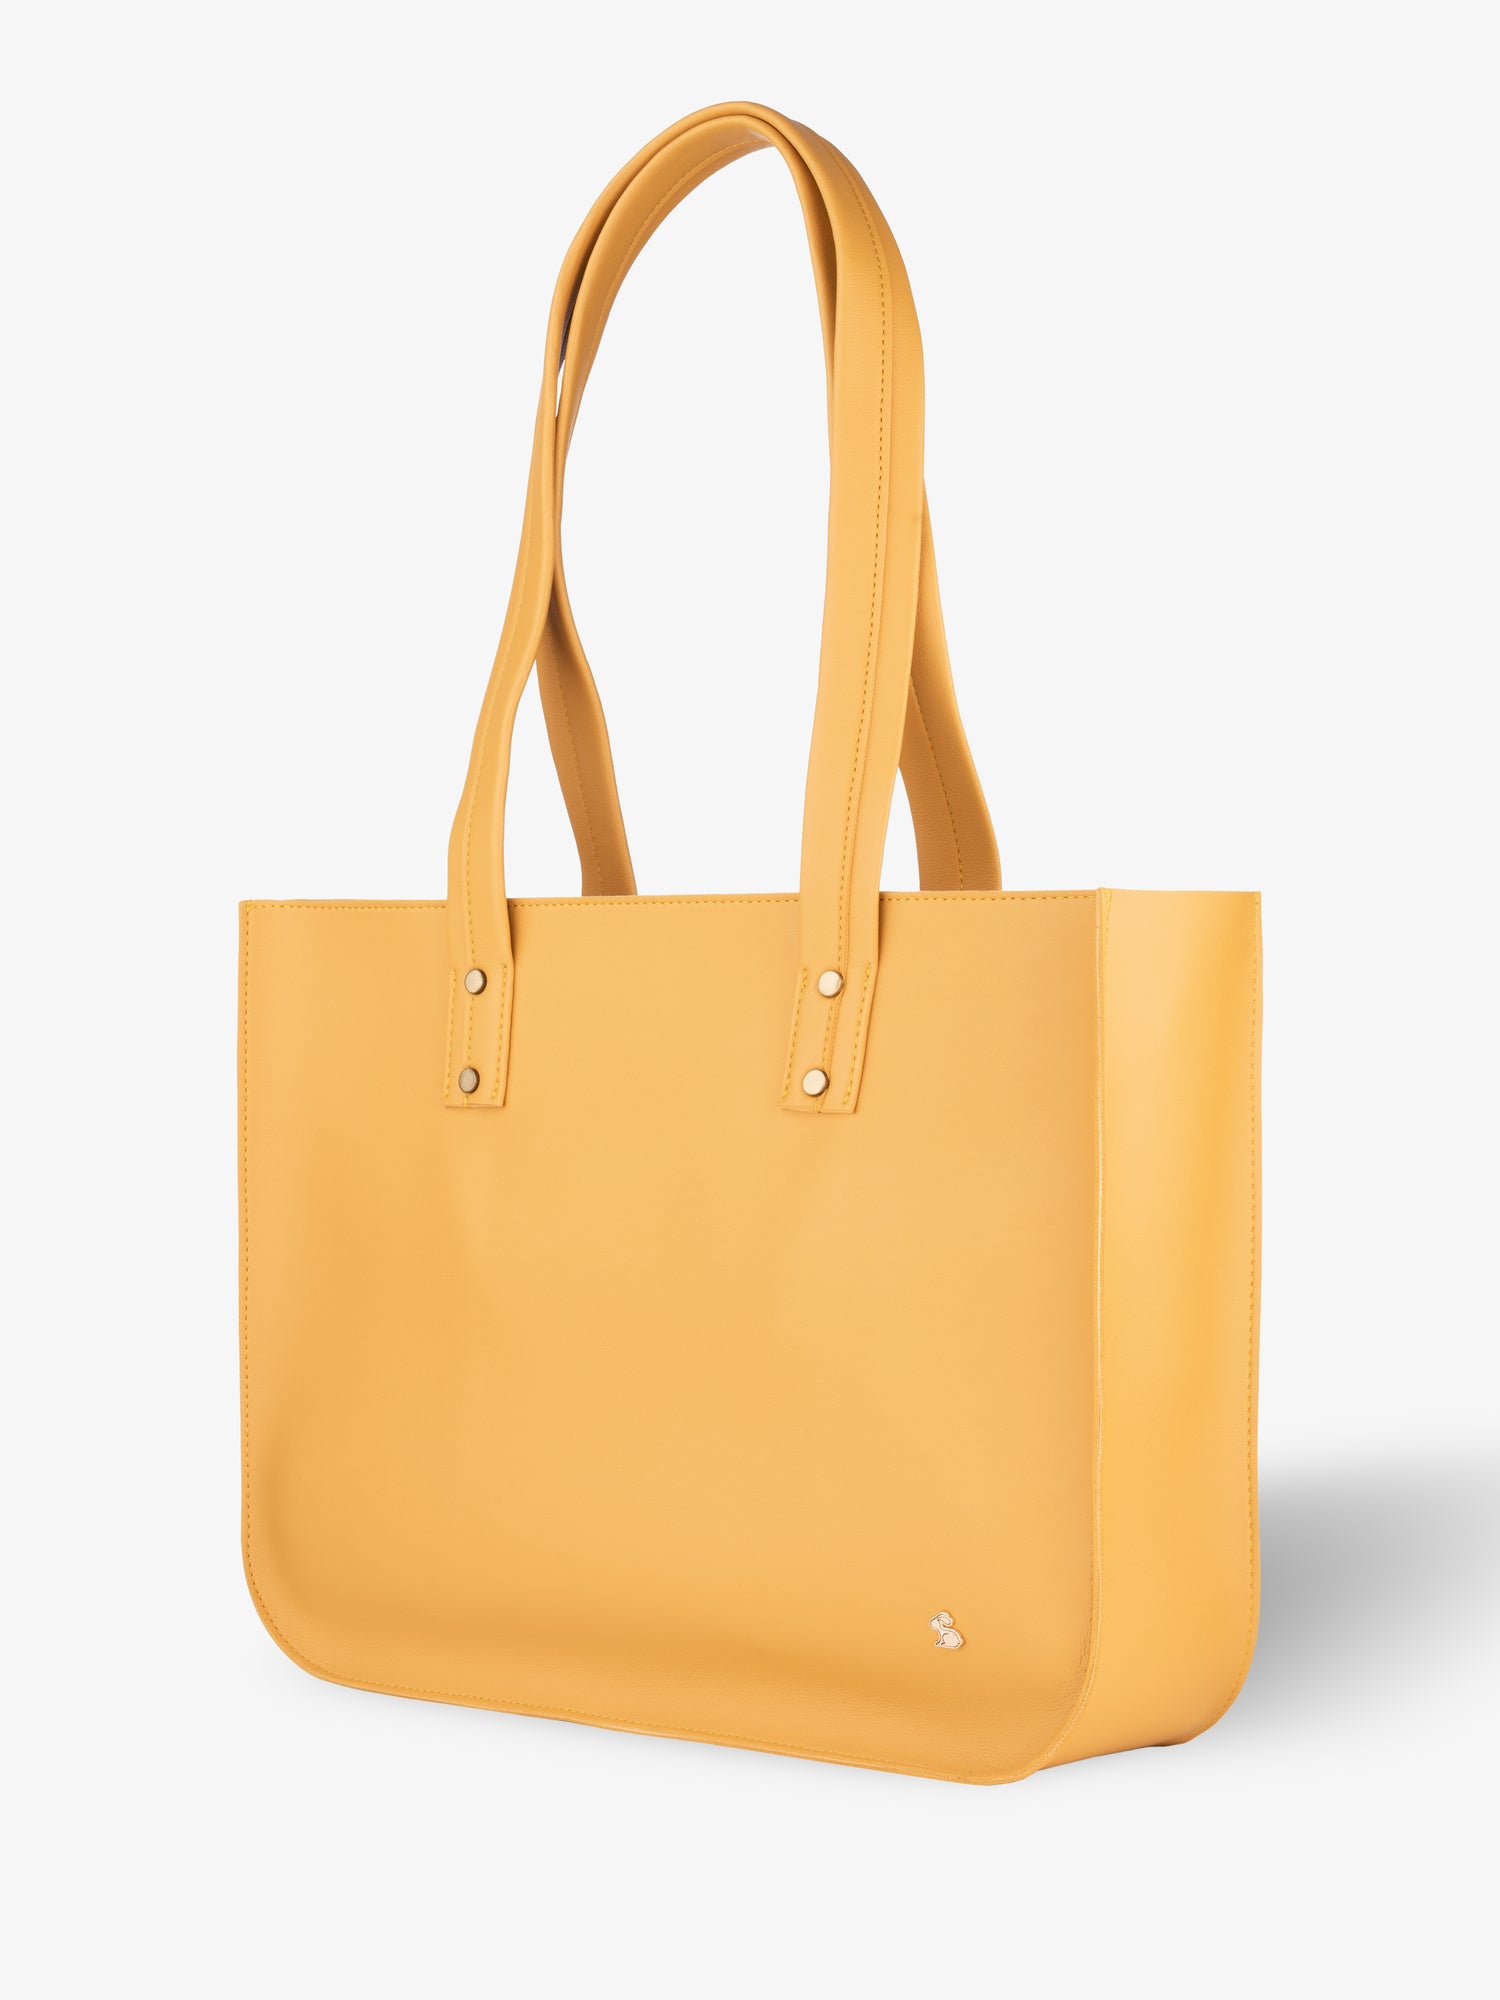 orange tote bag